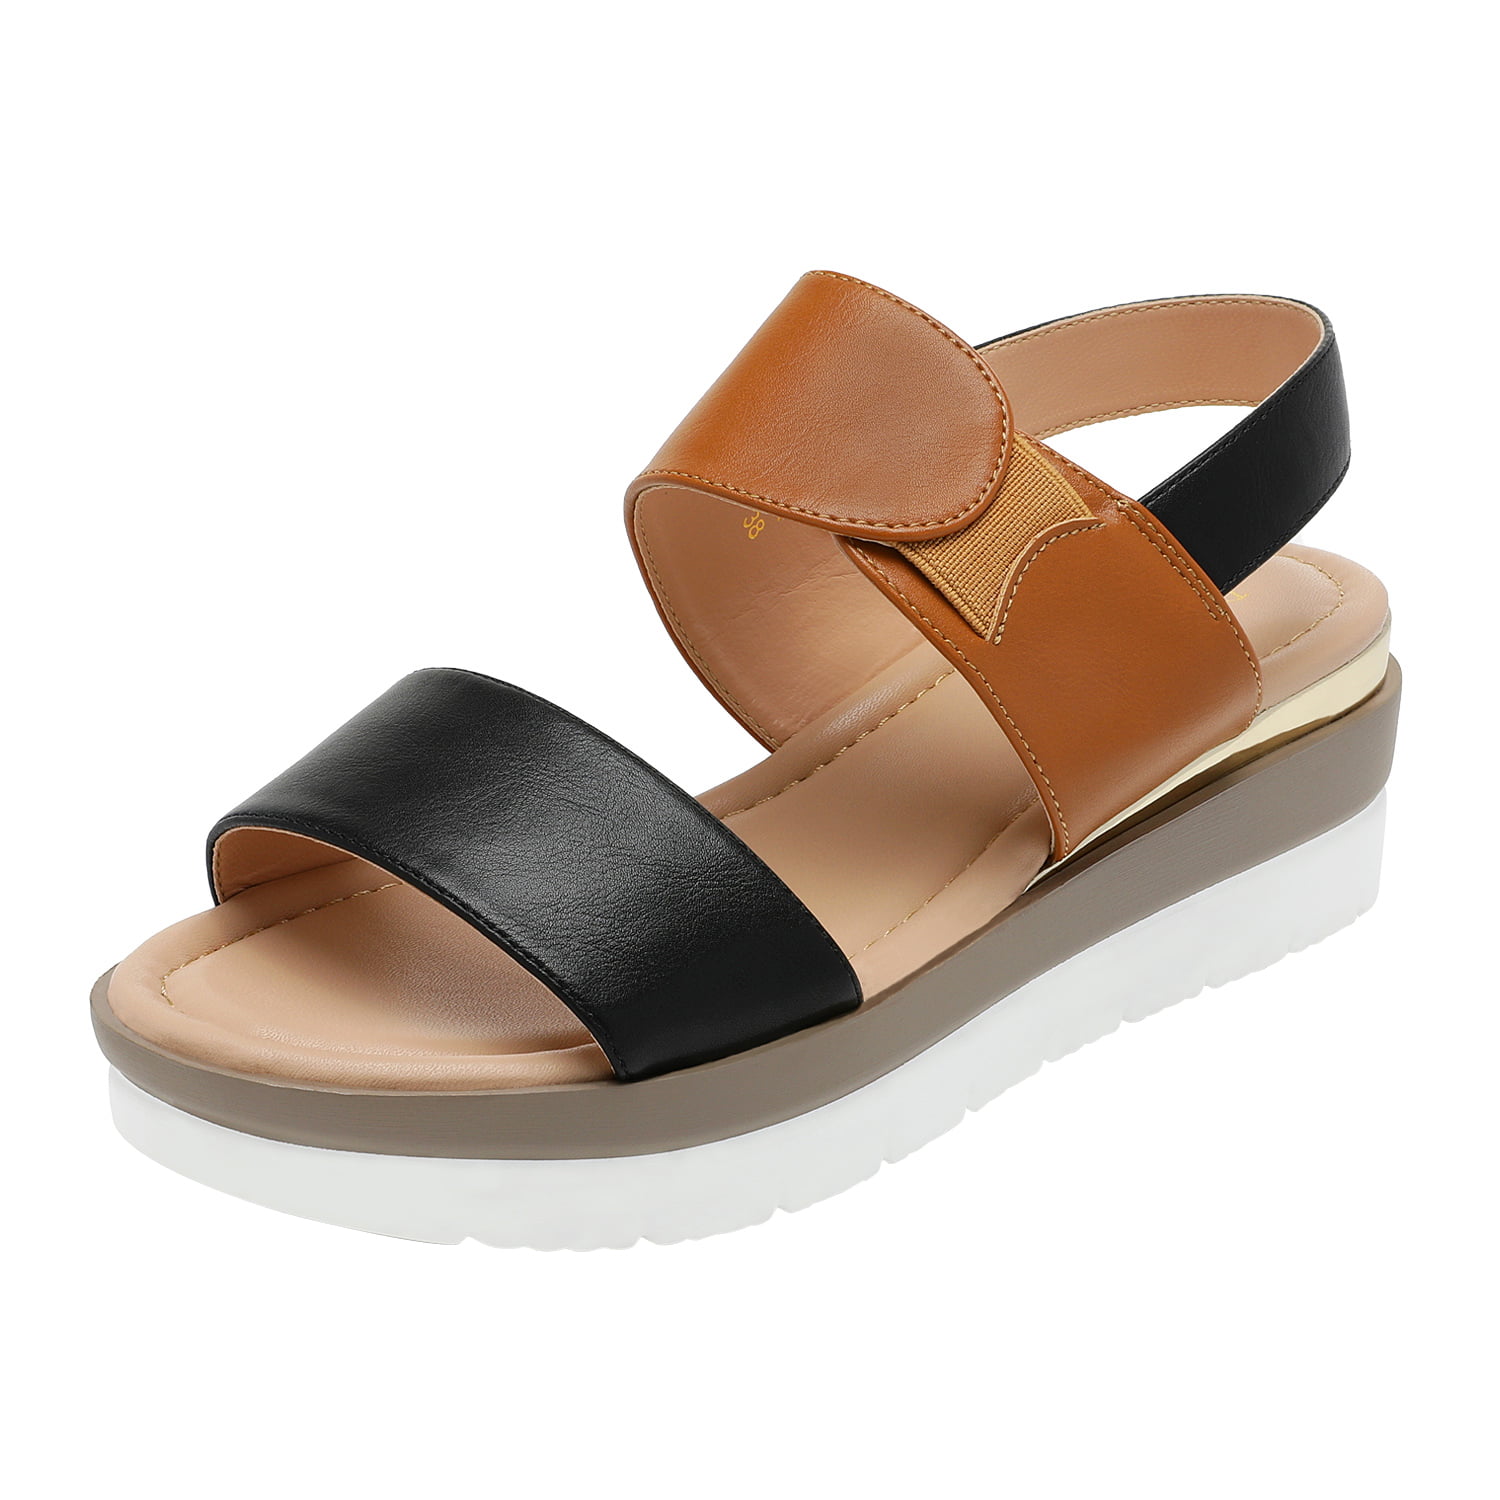 Platform sandals  3 color  leather shoes by Andrea size 8.5 & 9 medium 